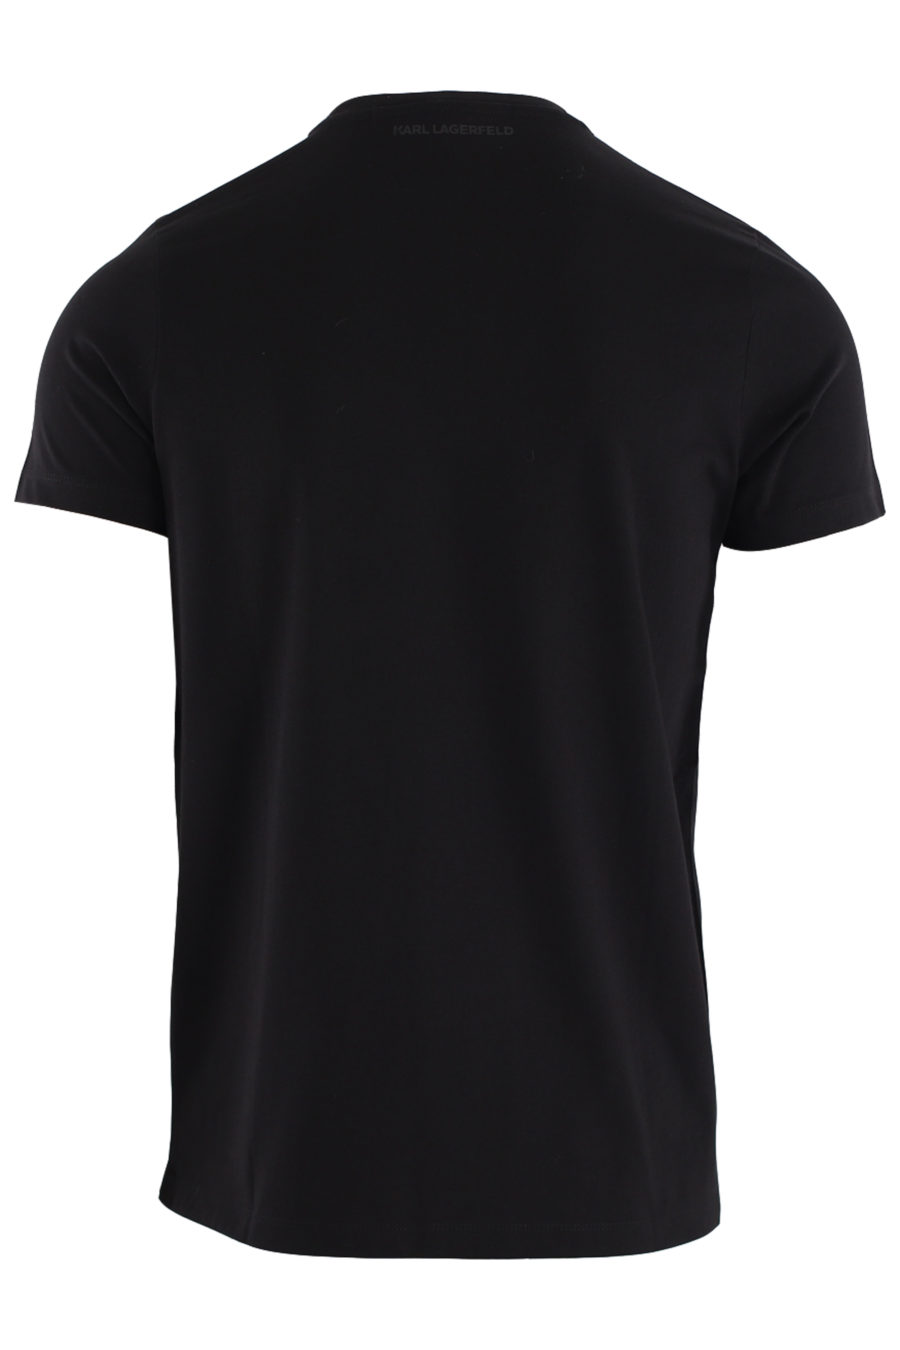 Camiseta negra con logo azul multicolor - IMG 8773